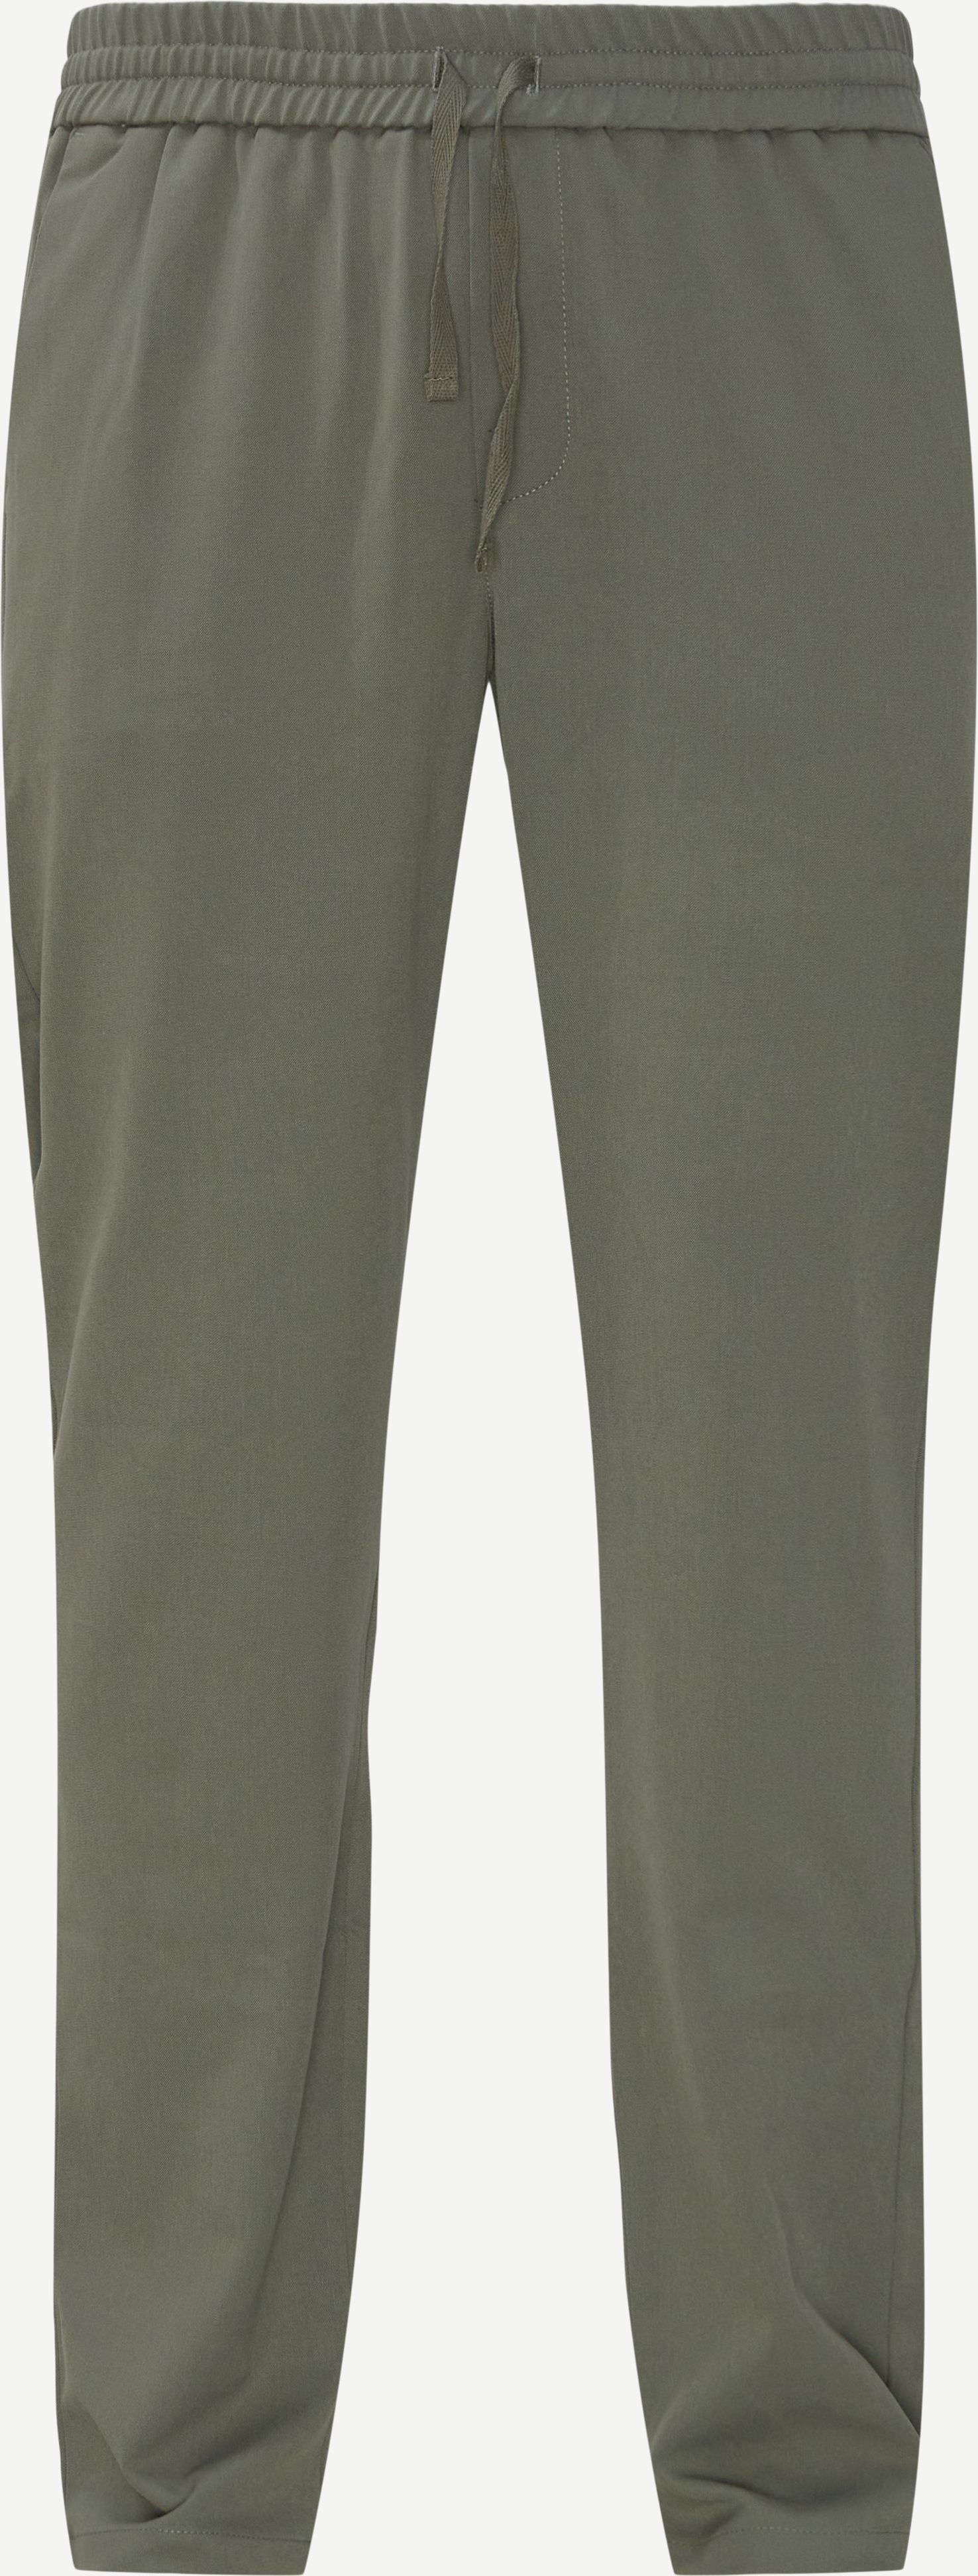 Patrick Drawstring Pants - Bukser - Regular fit - Grøn